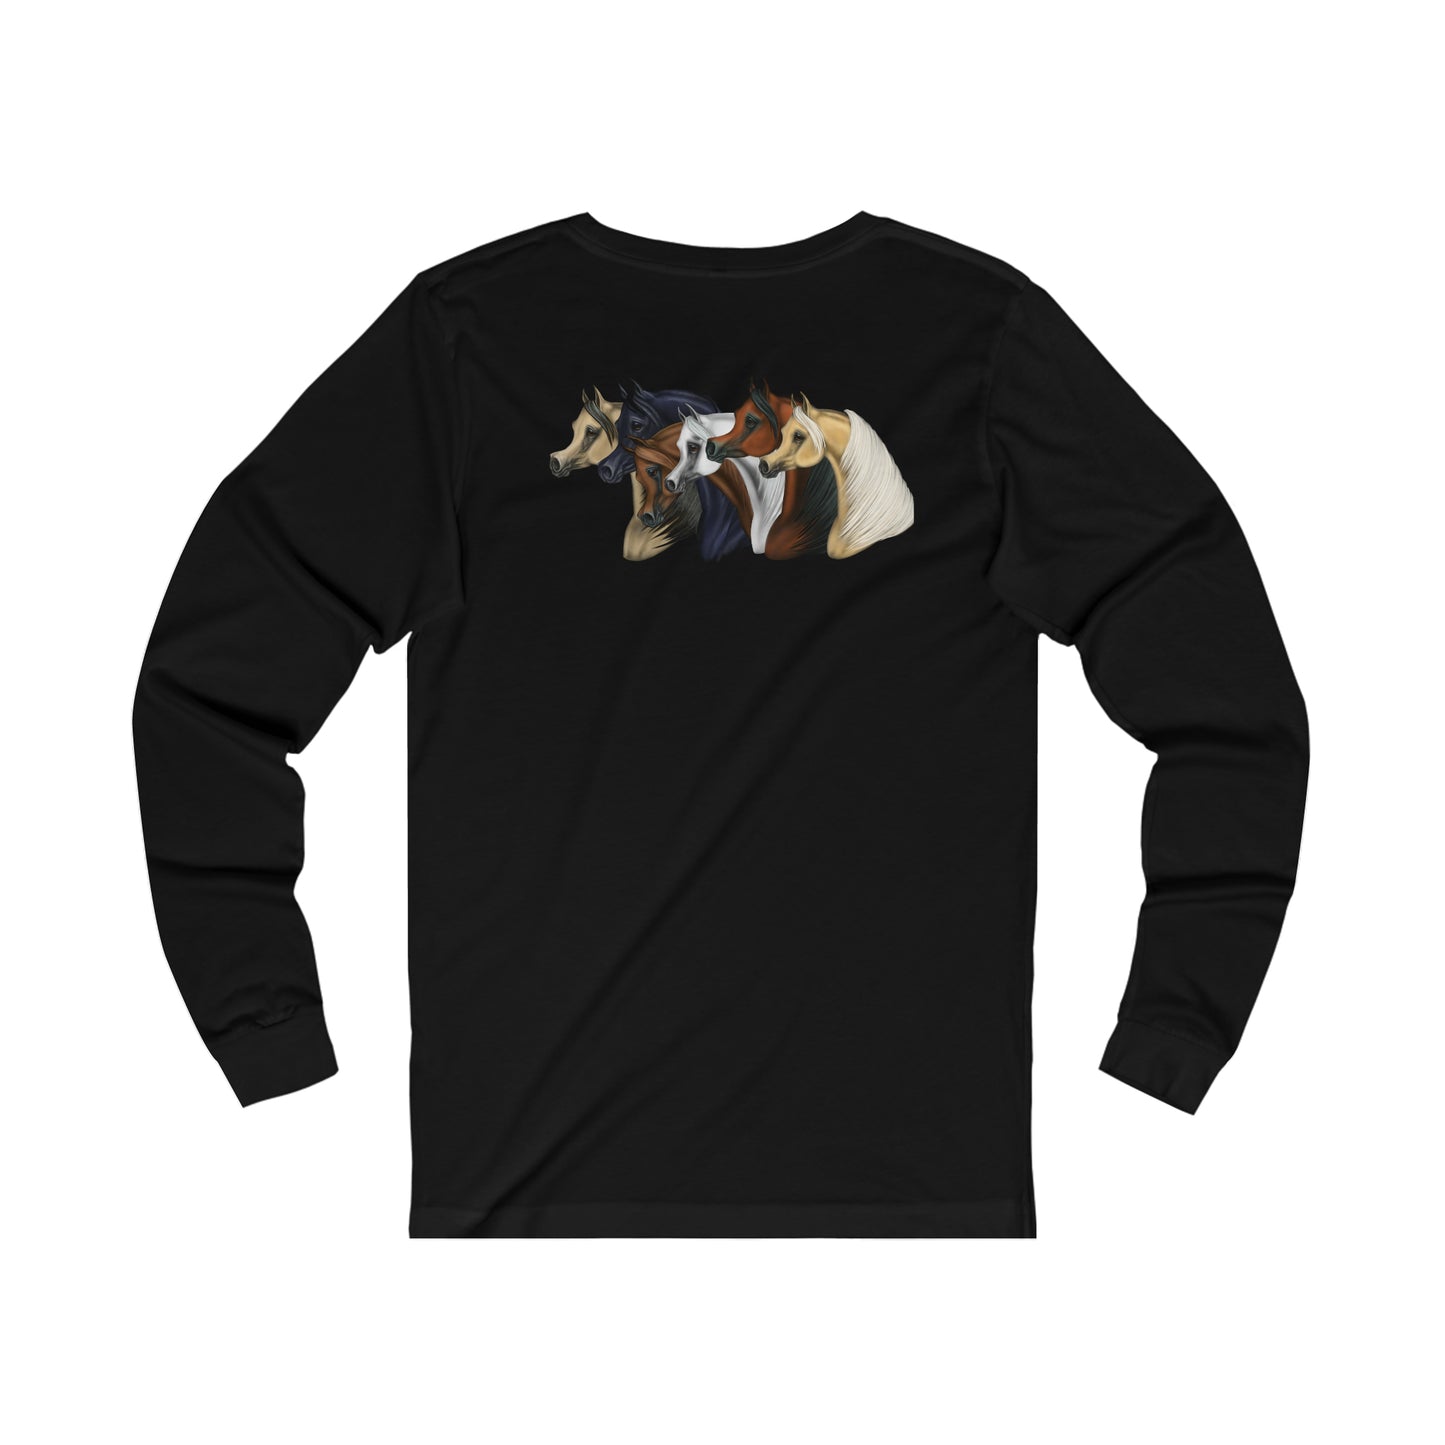 Arabian horse shirt Long Sleeve Tee gift for horse lover owner equestrian veterinarian vet tech trainer horse shirt sweater tee T-shirt